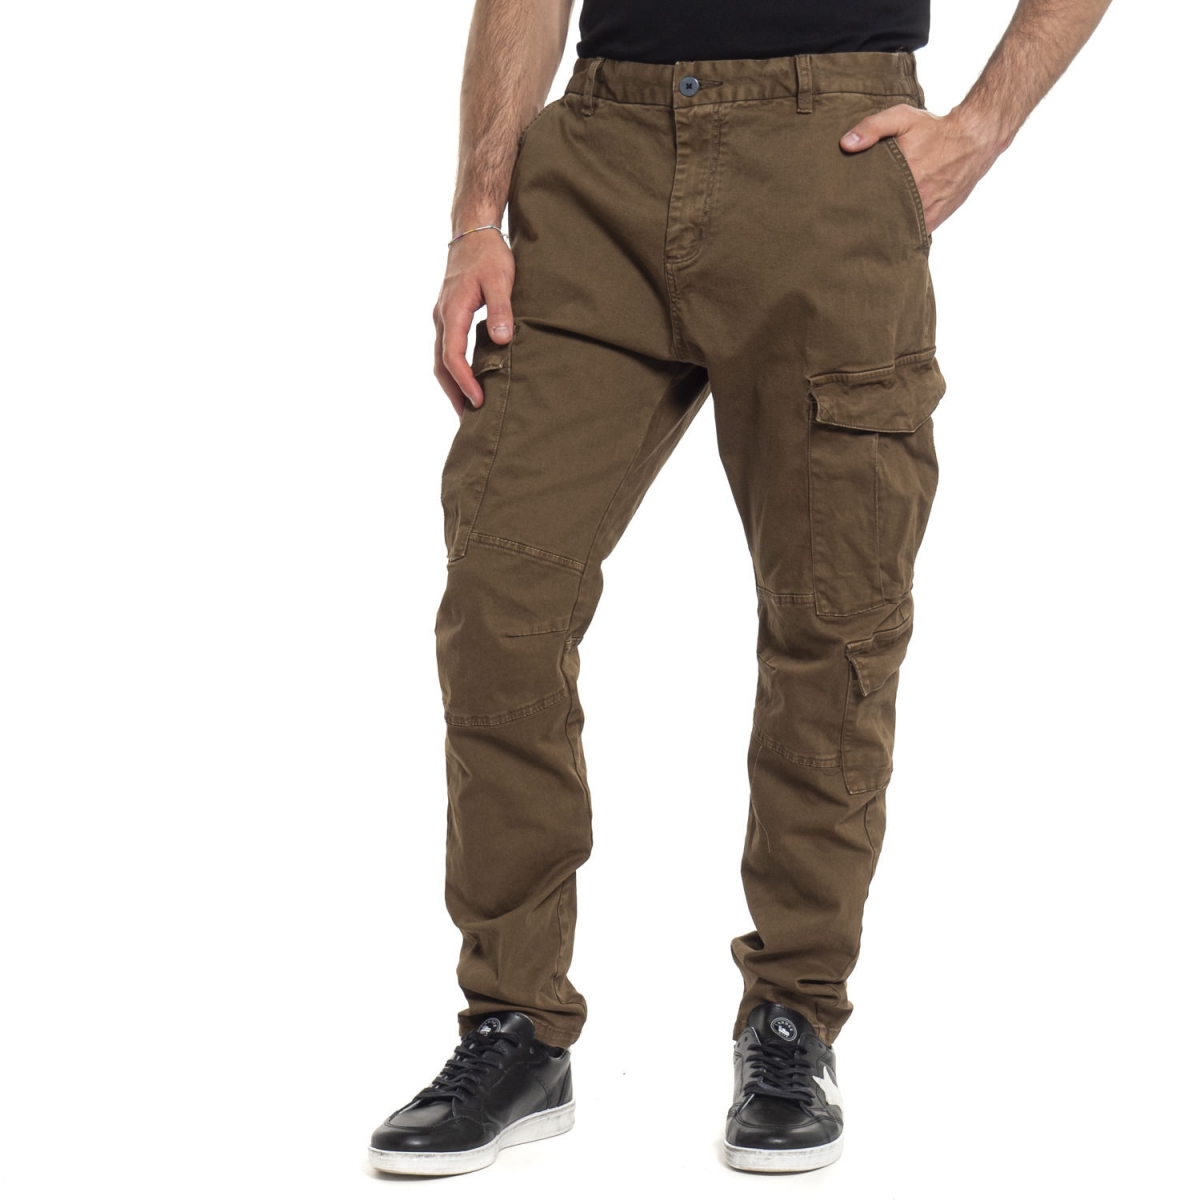 Kleidung Hose mann Pantalone LPP0010 LANDEK PARK Cafedelmar Shop